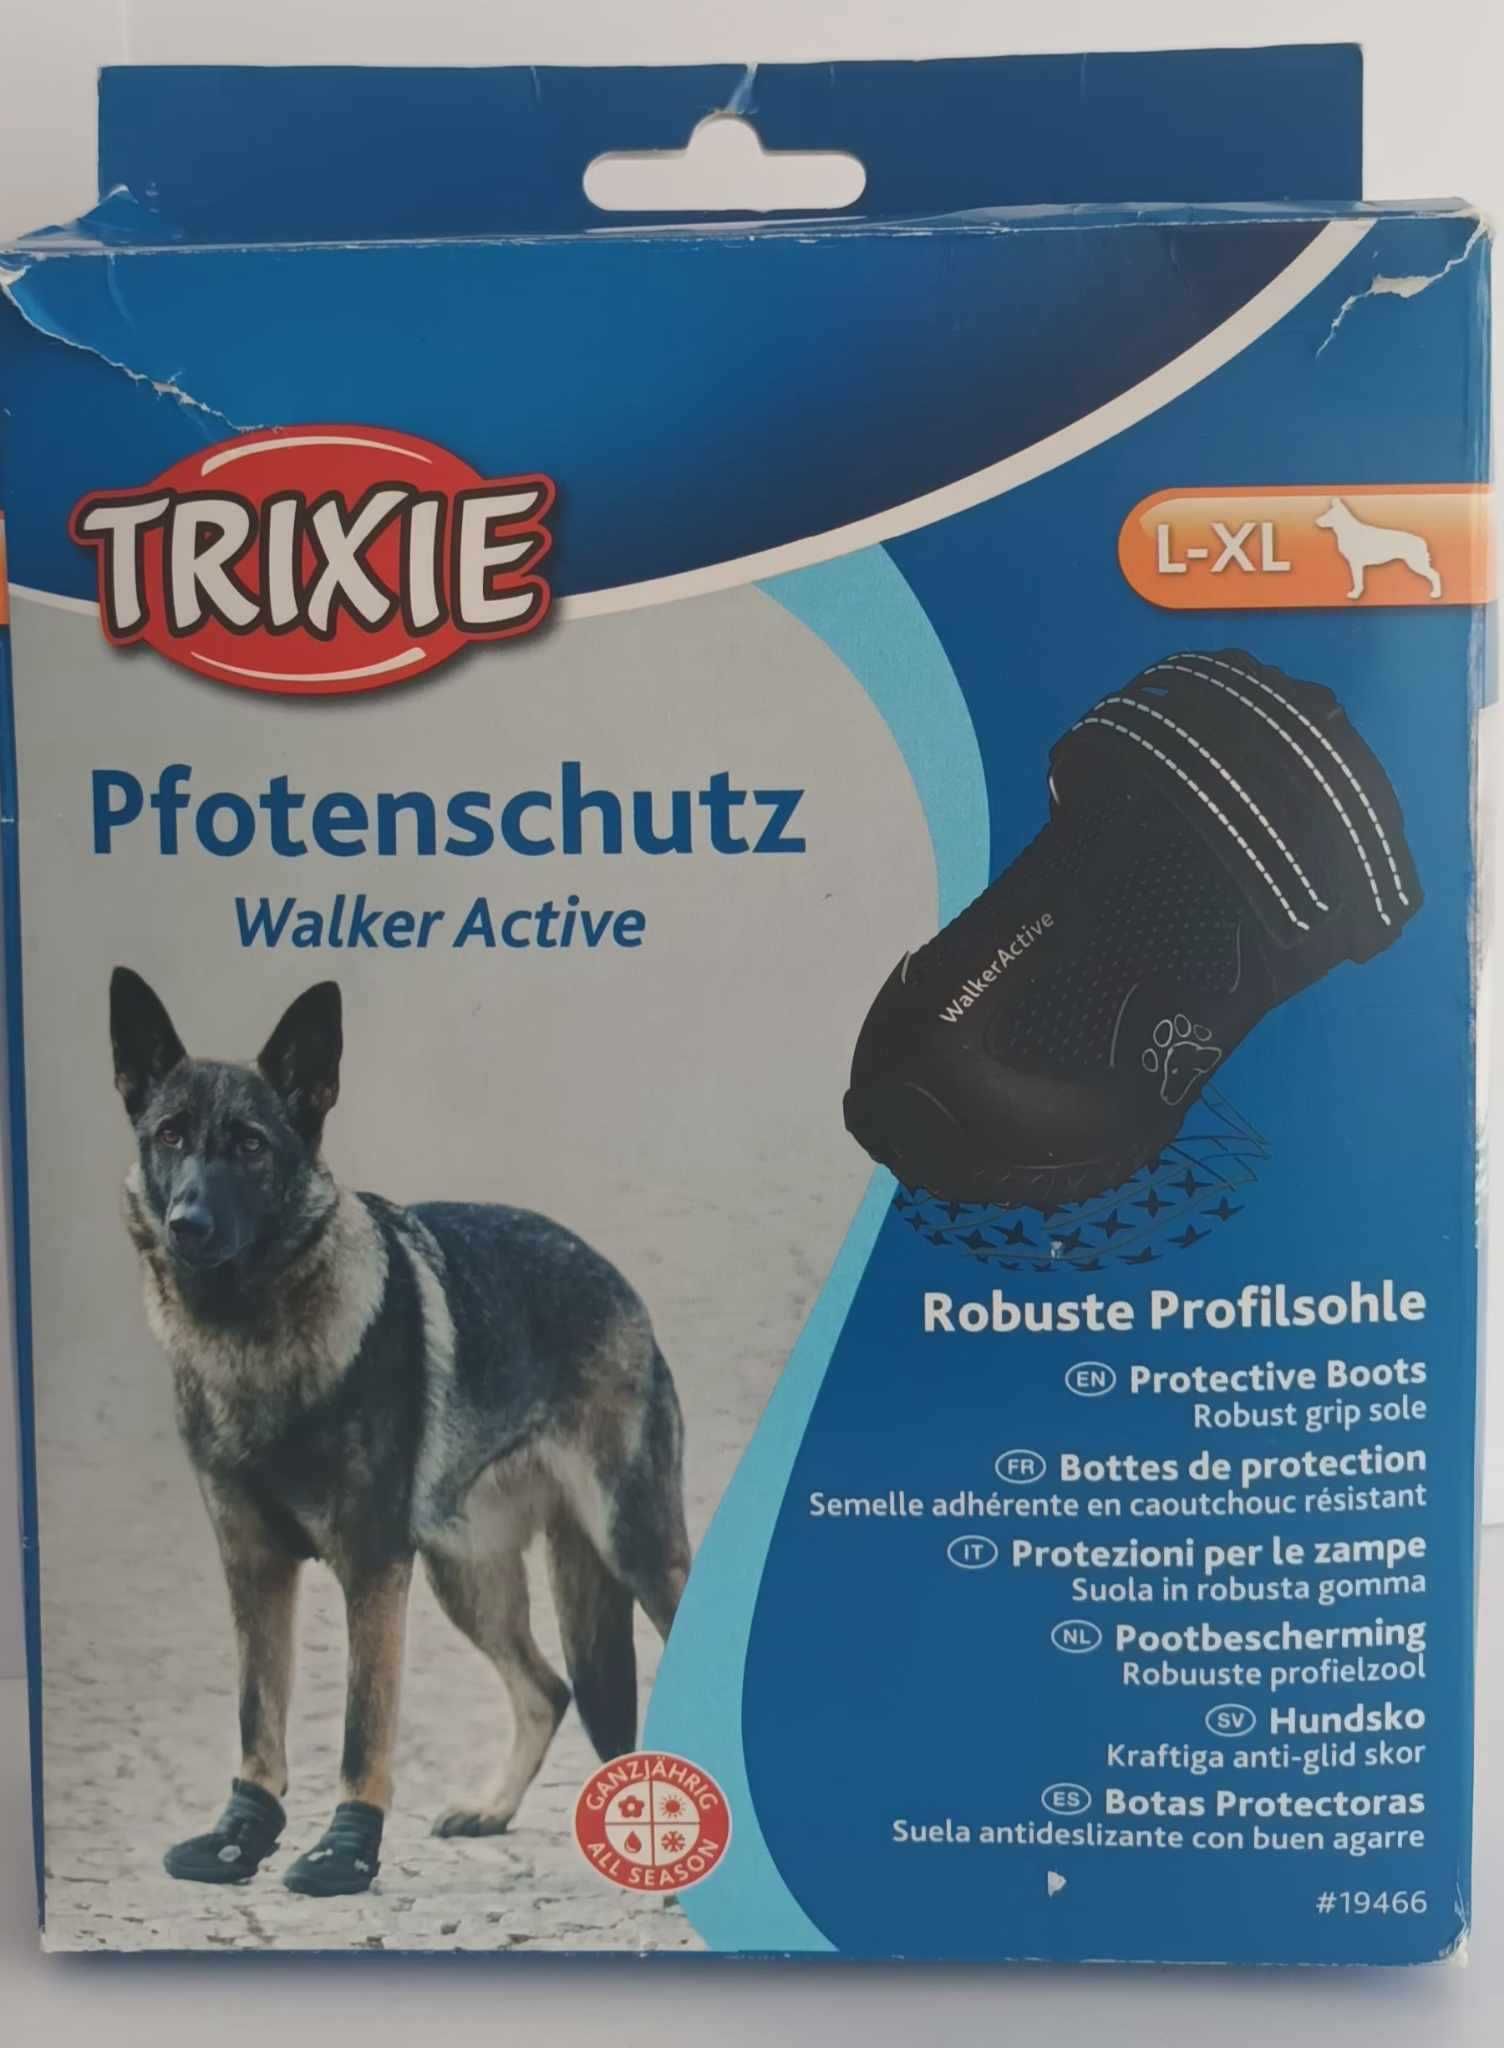 Trixie Walker Activen - botas protectoras para caes -tamanho M e L-XL